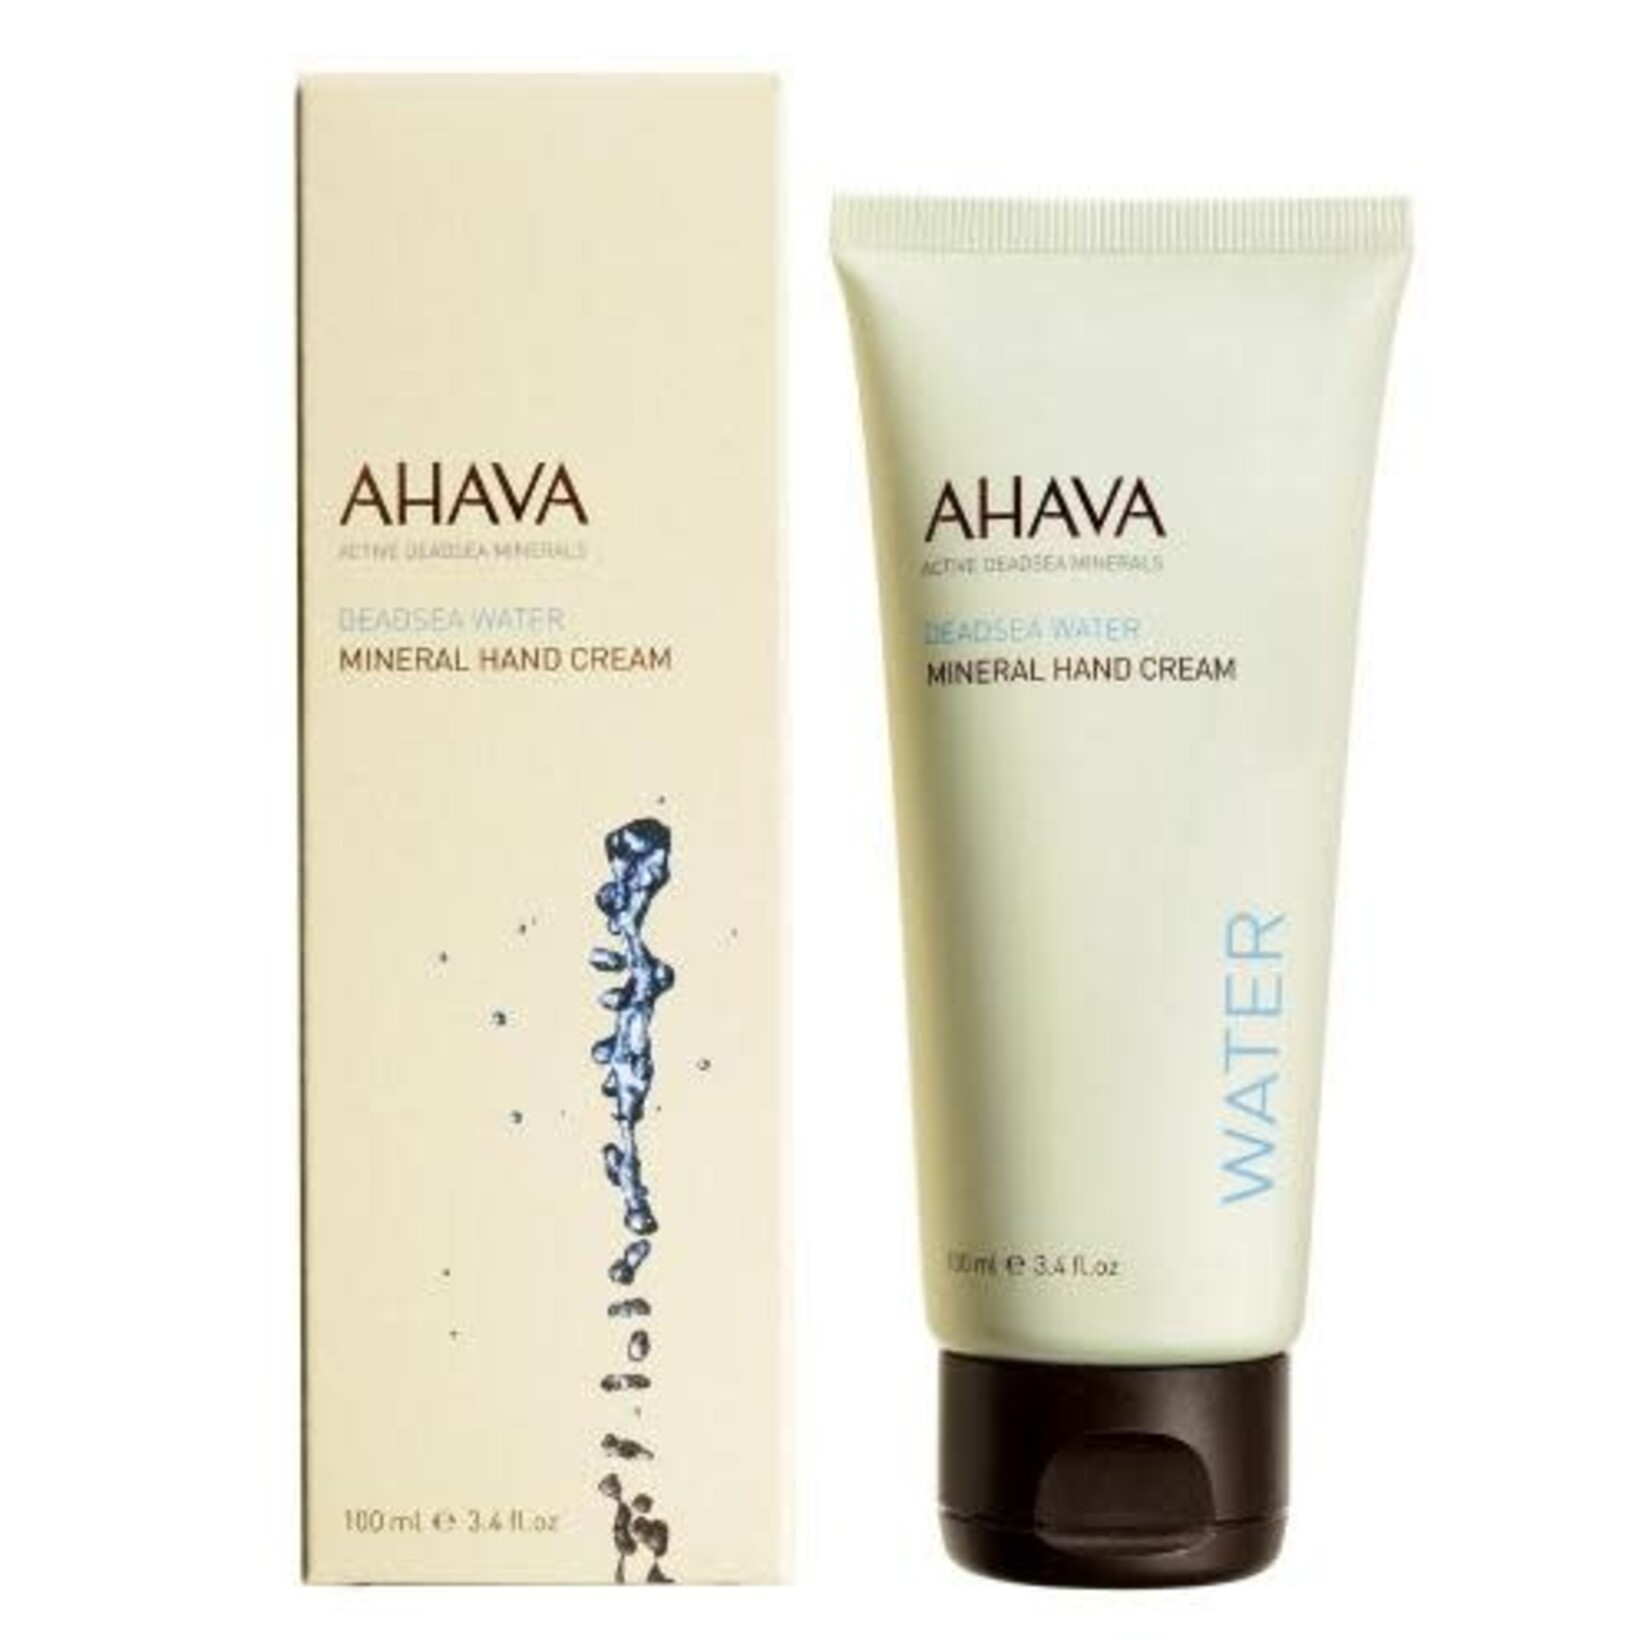 AHAVA Dead Sea Water Mineral Hand Cream, 100mL